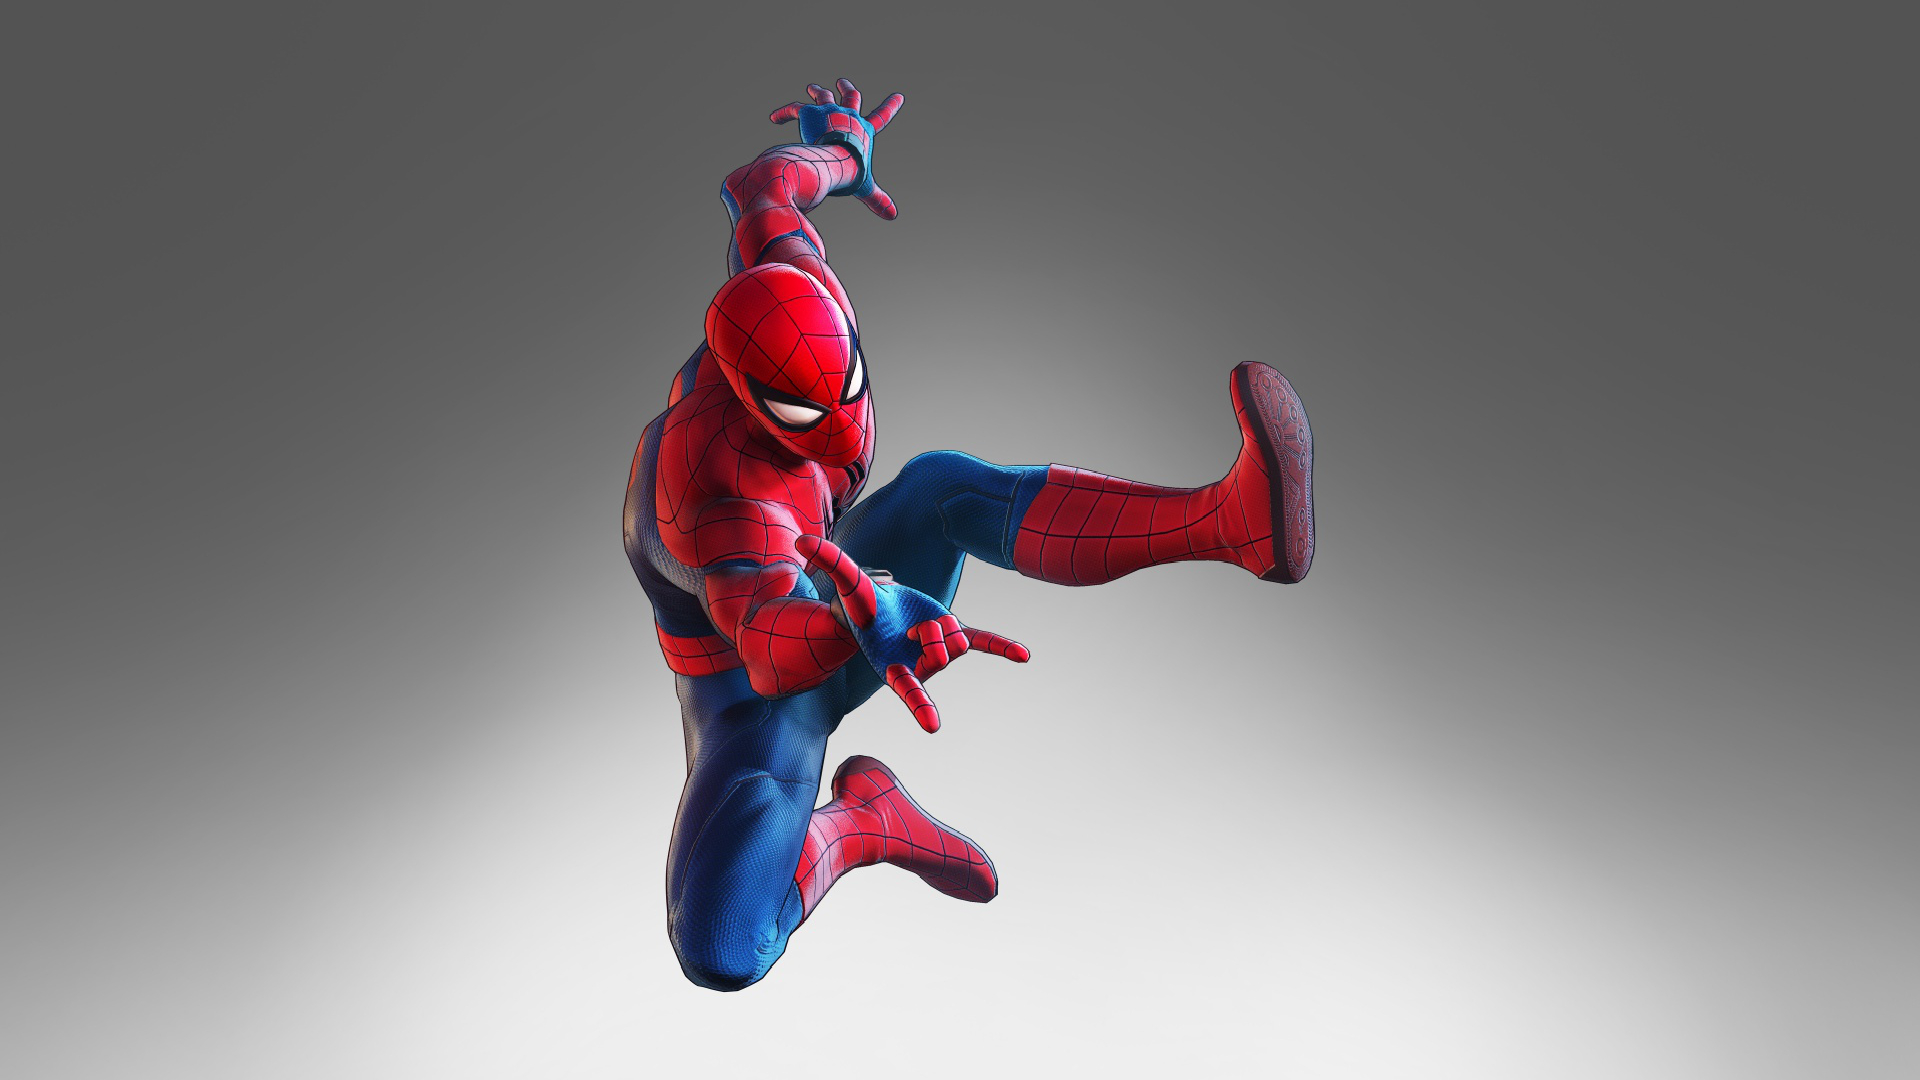 free wallpaper,spider man,superhero,fictional character,action figure,figurine